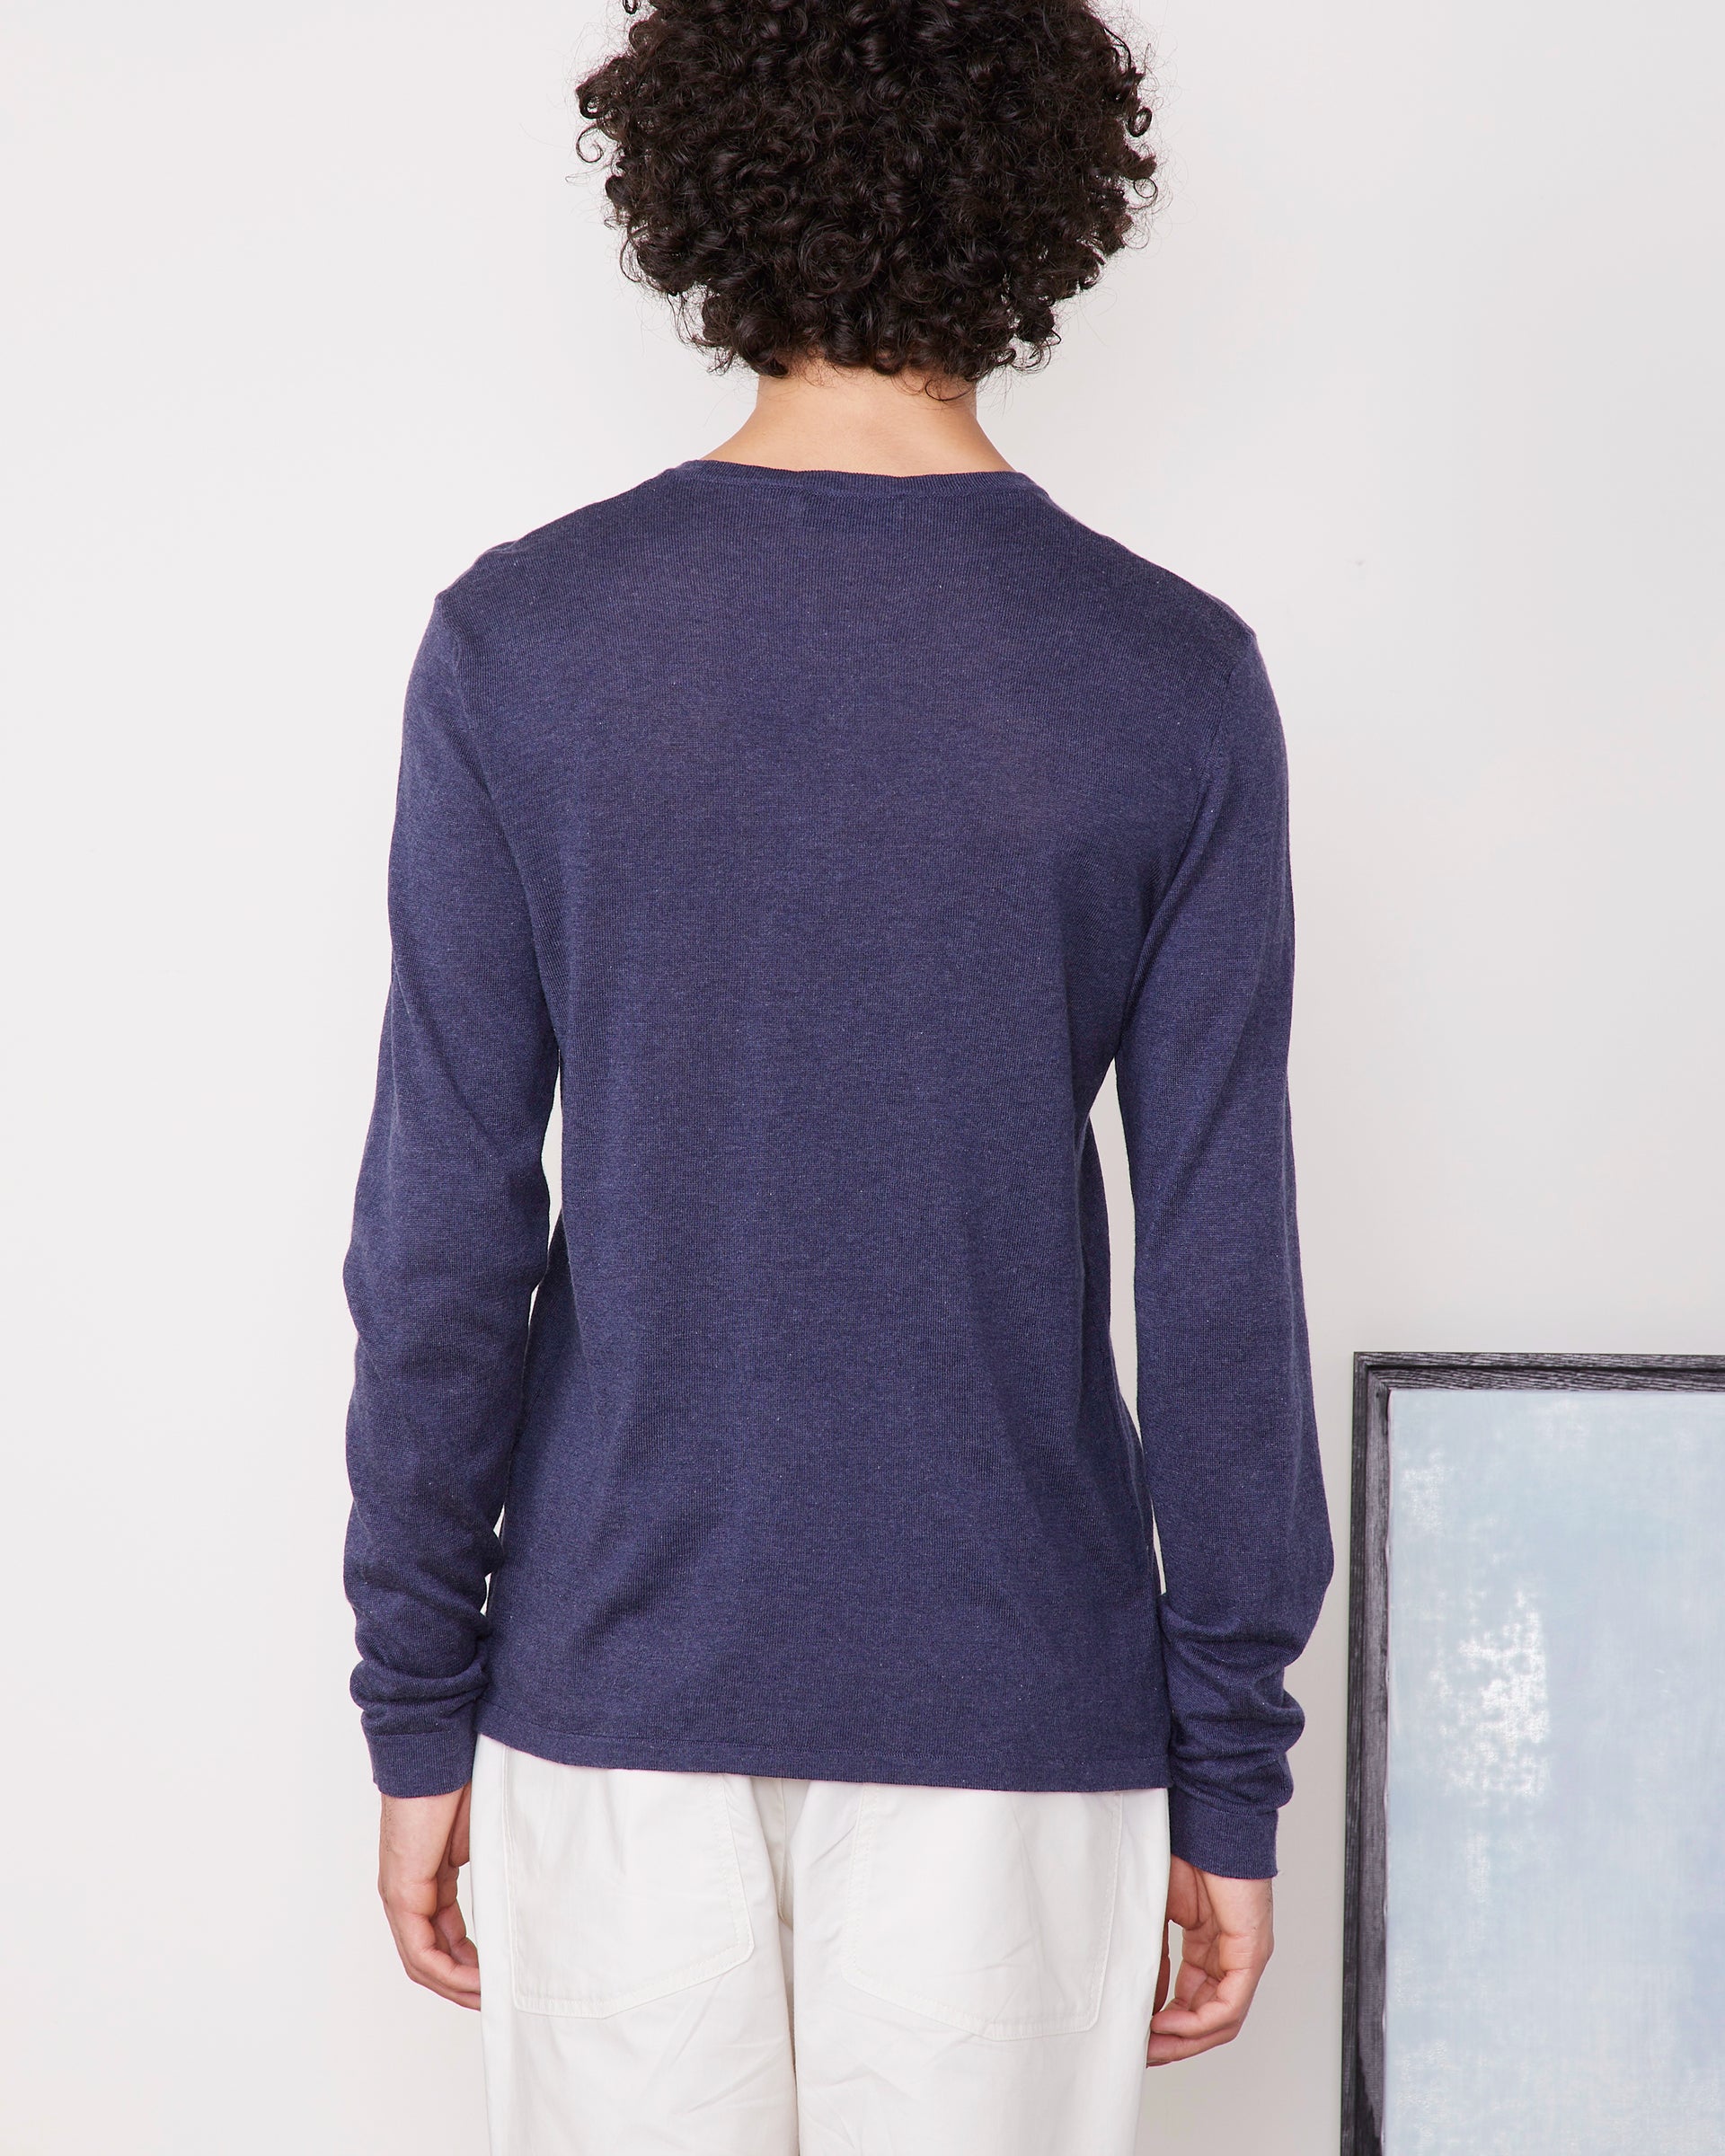 Hansel sweater - Image 3